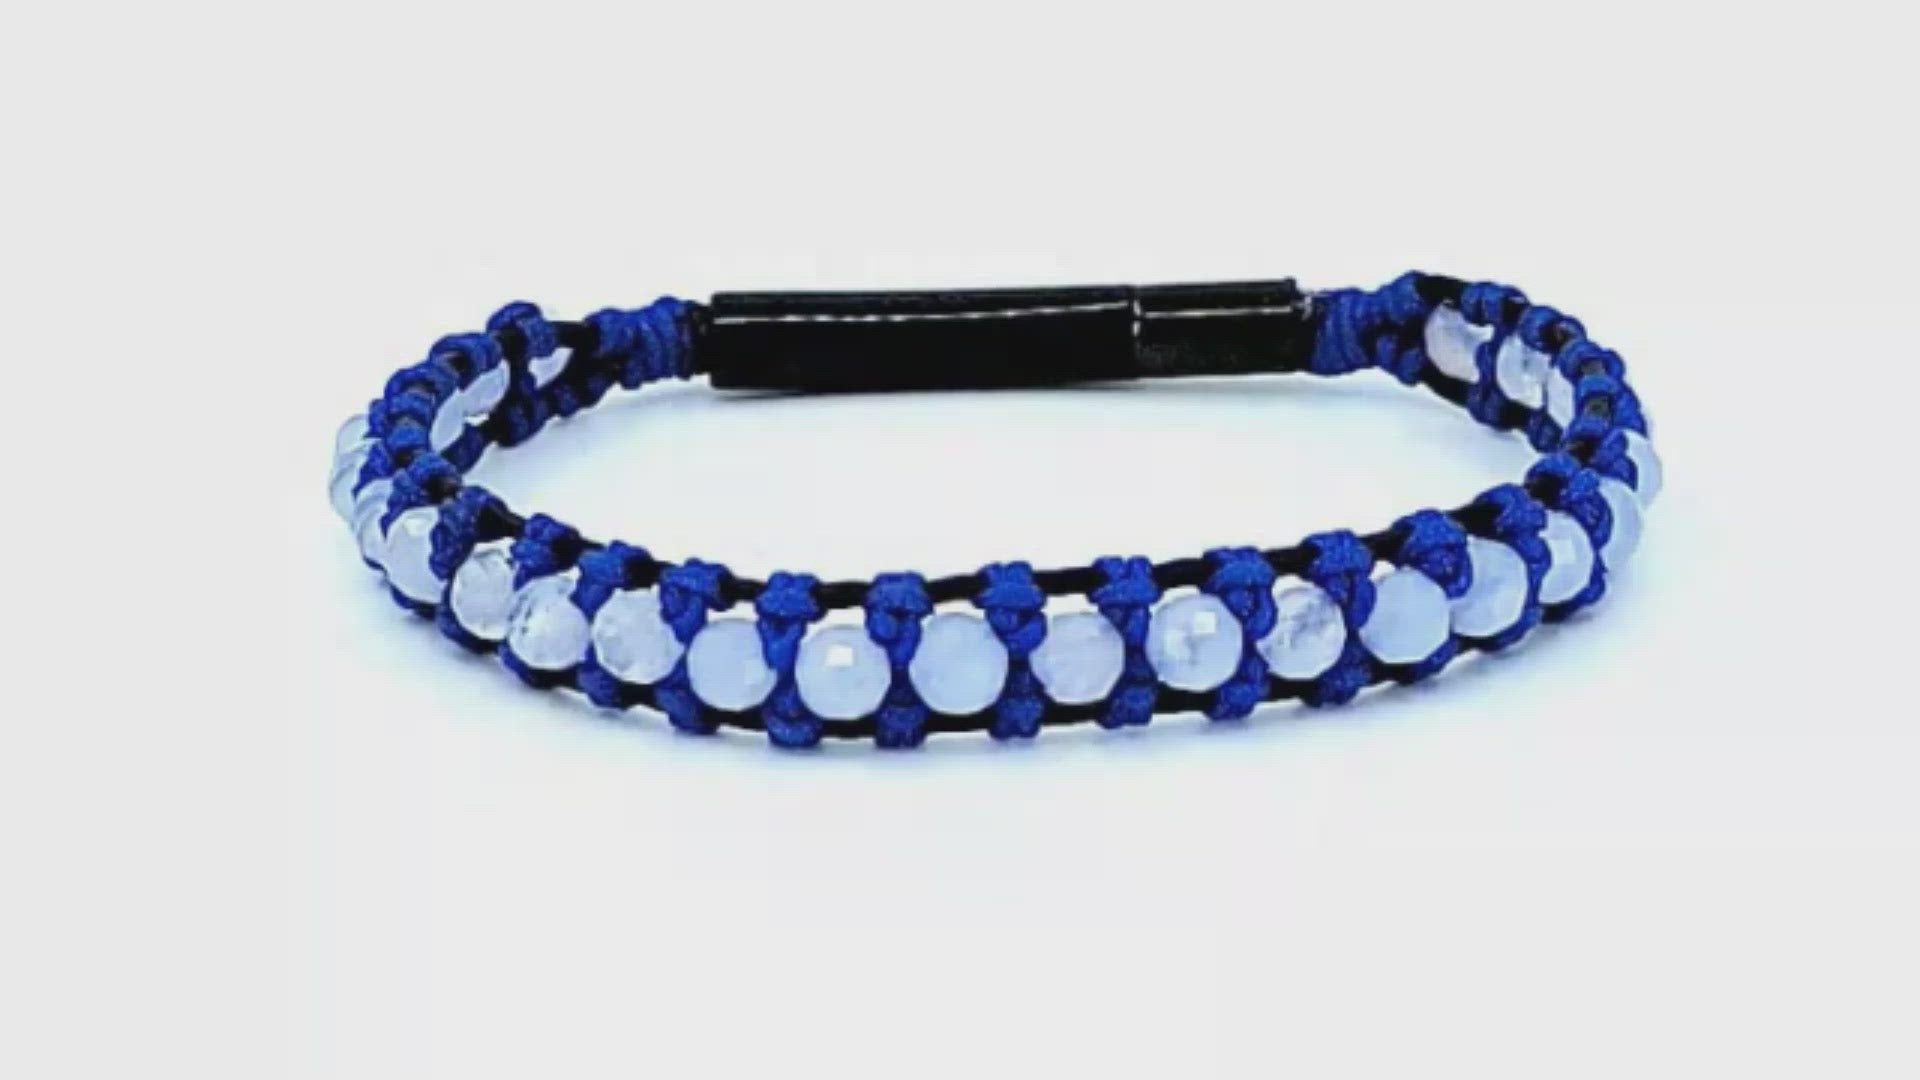 Blue Lace Agate Leather Bracelet